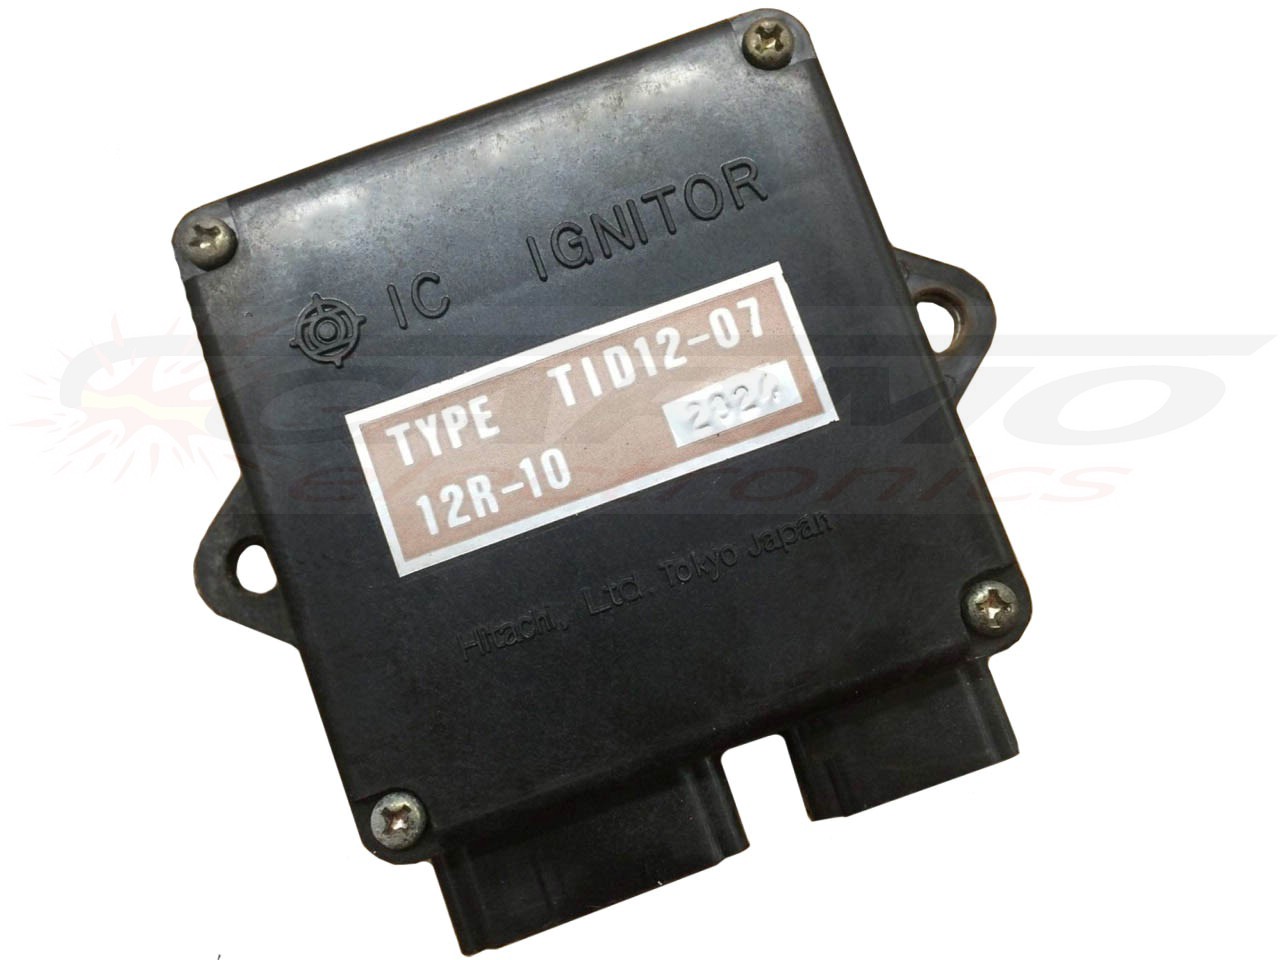 XS400 Maxim Seca igniter ignition module CDI TCI Box (TID12-07 